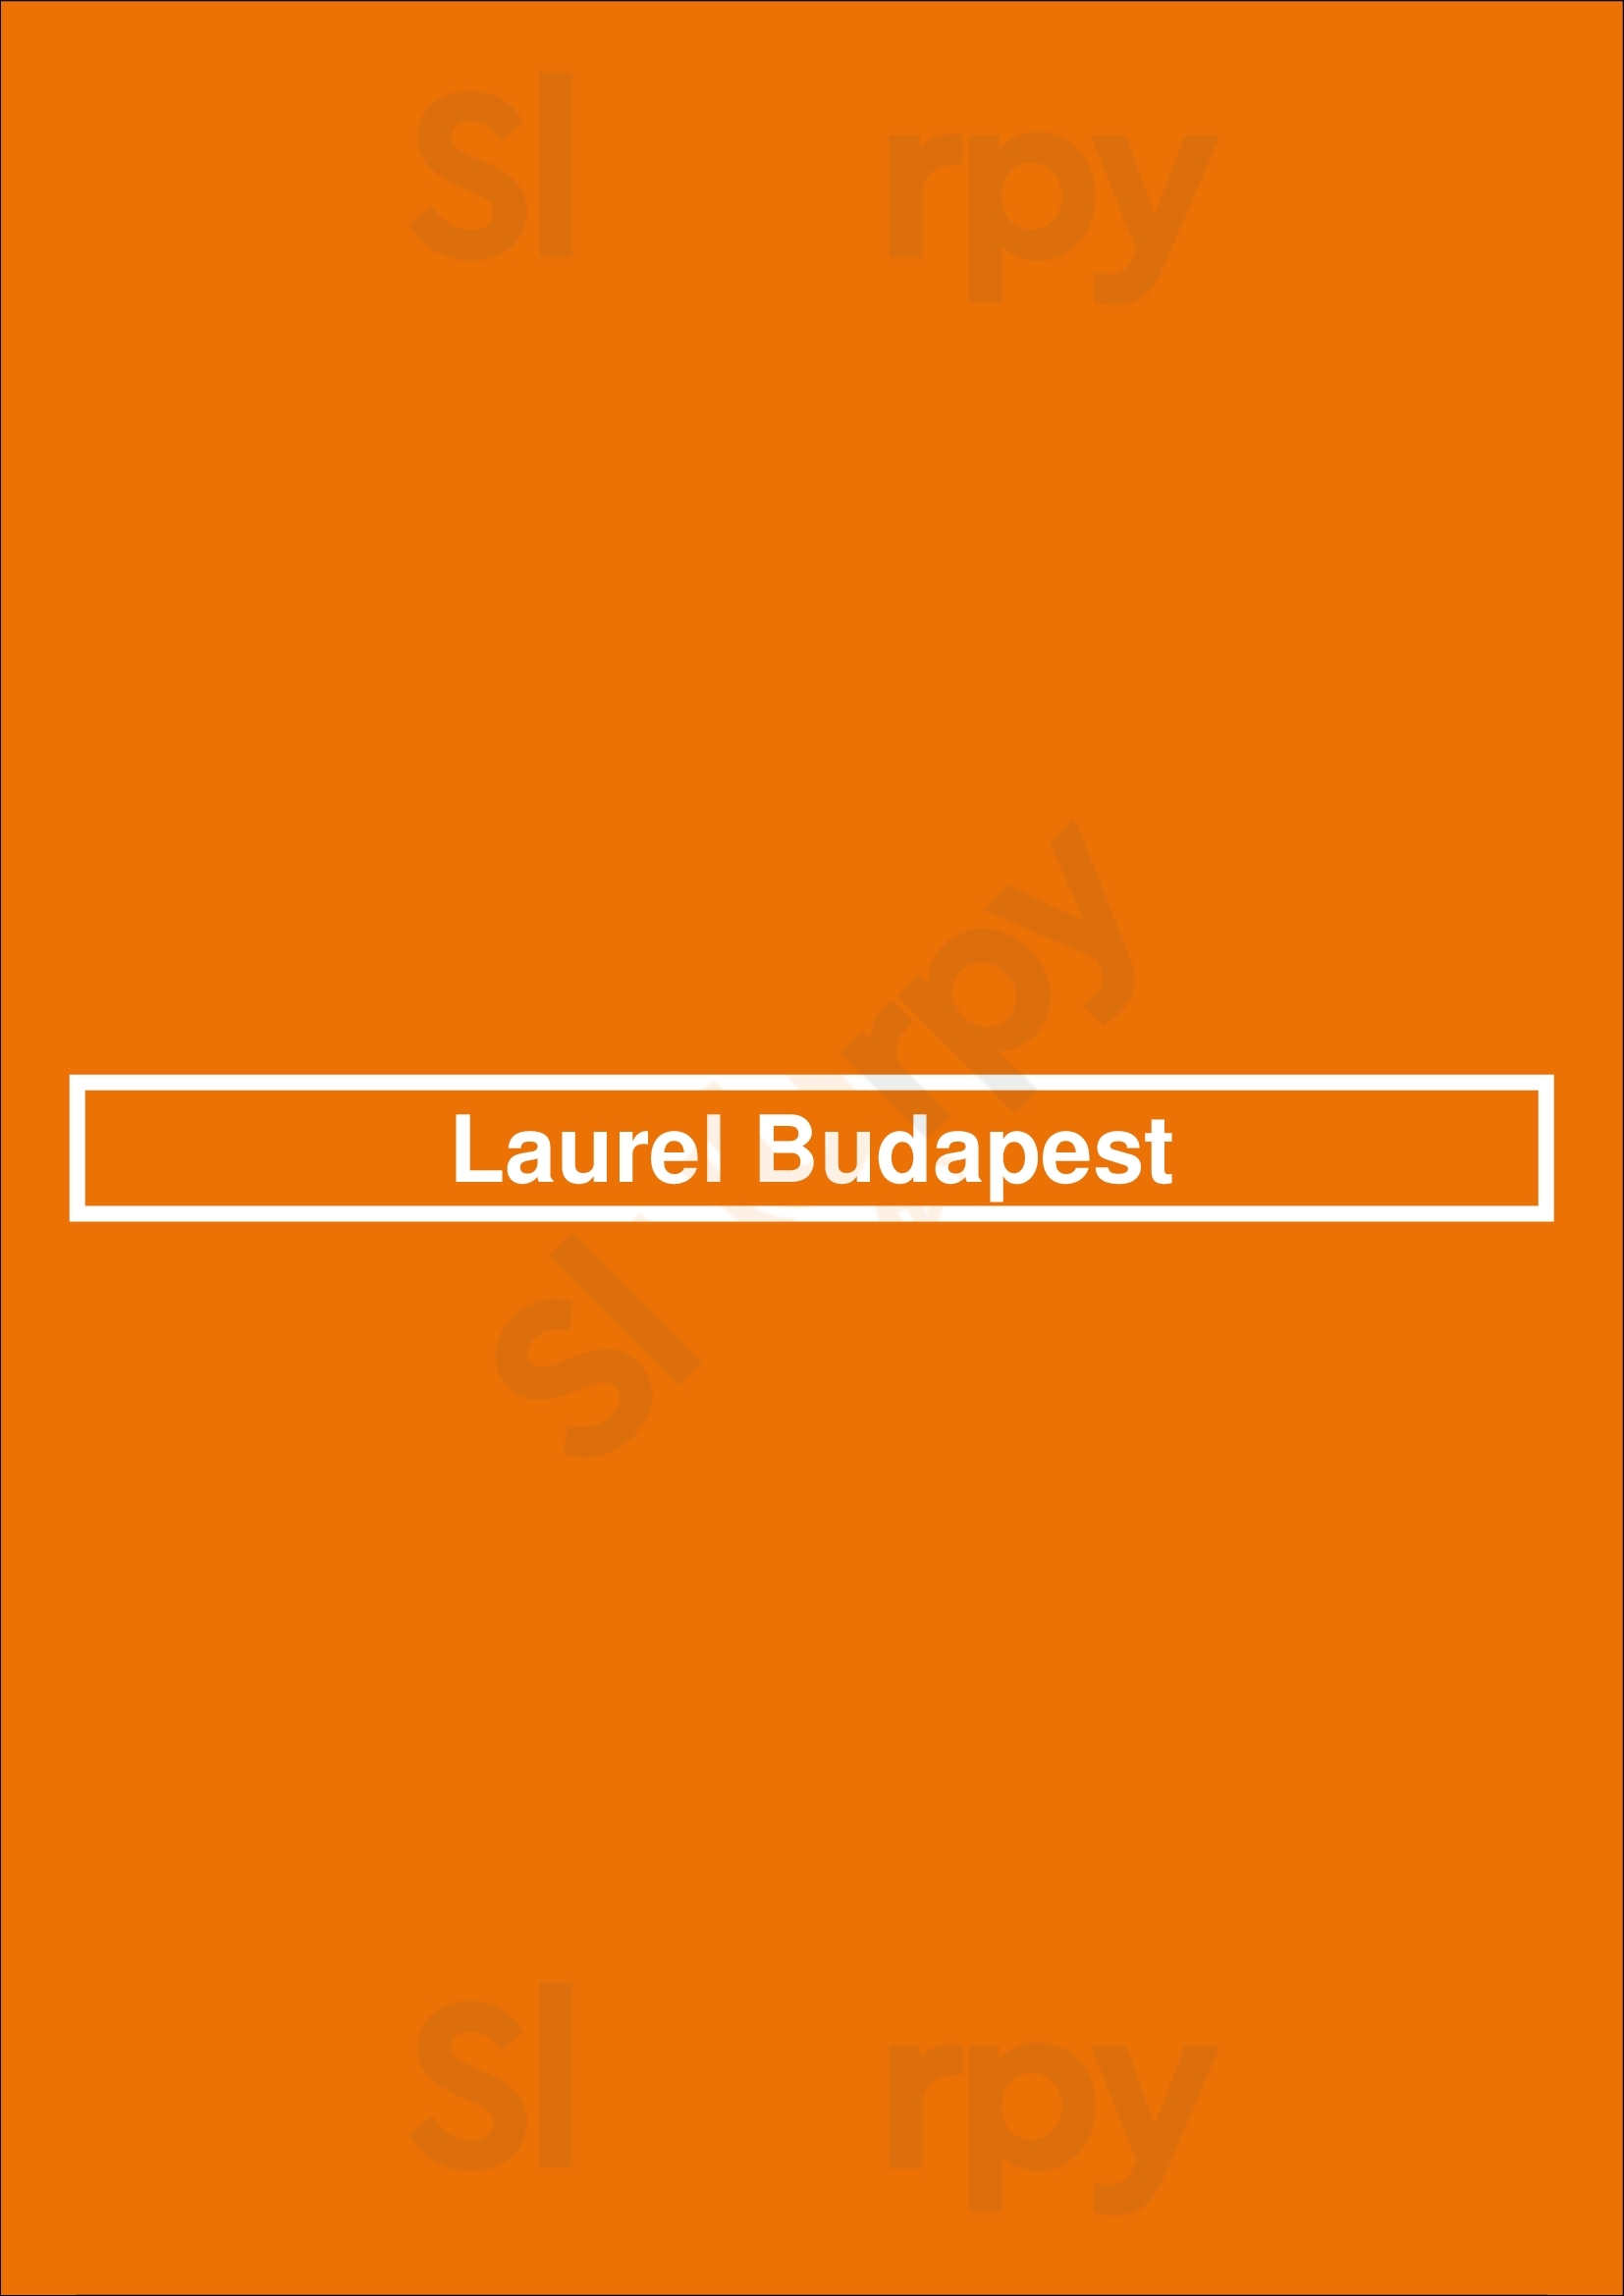 Laurel Budapest Budapest Menu - 1